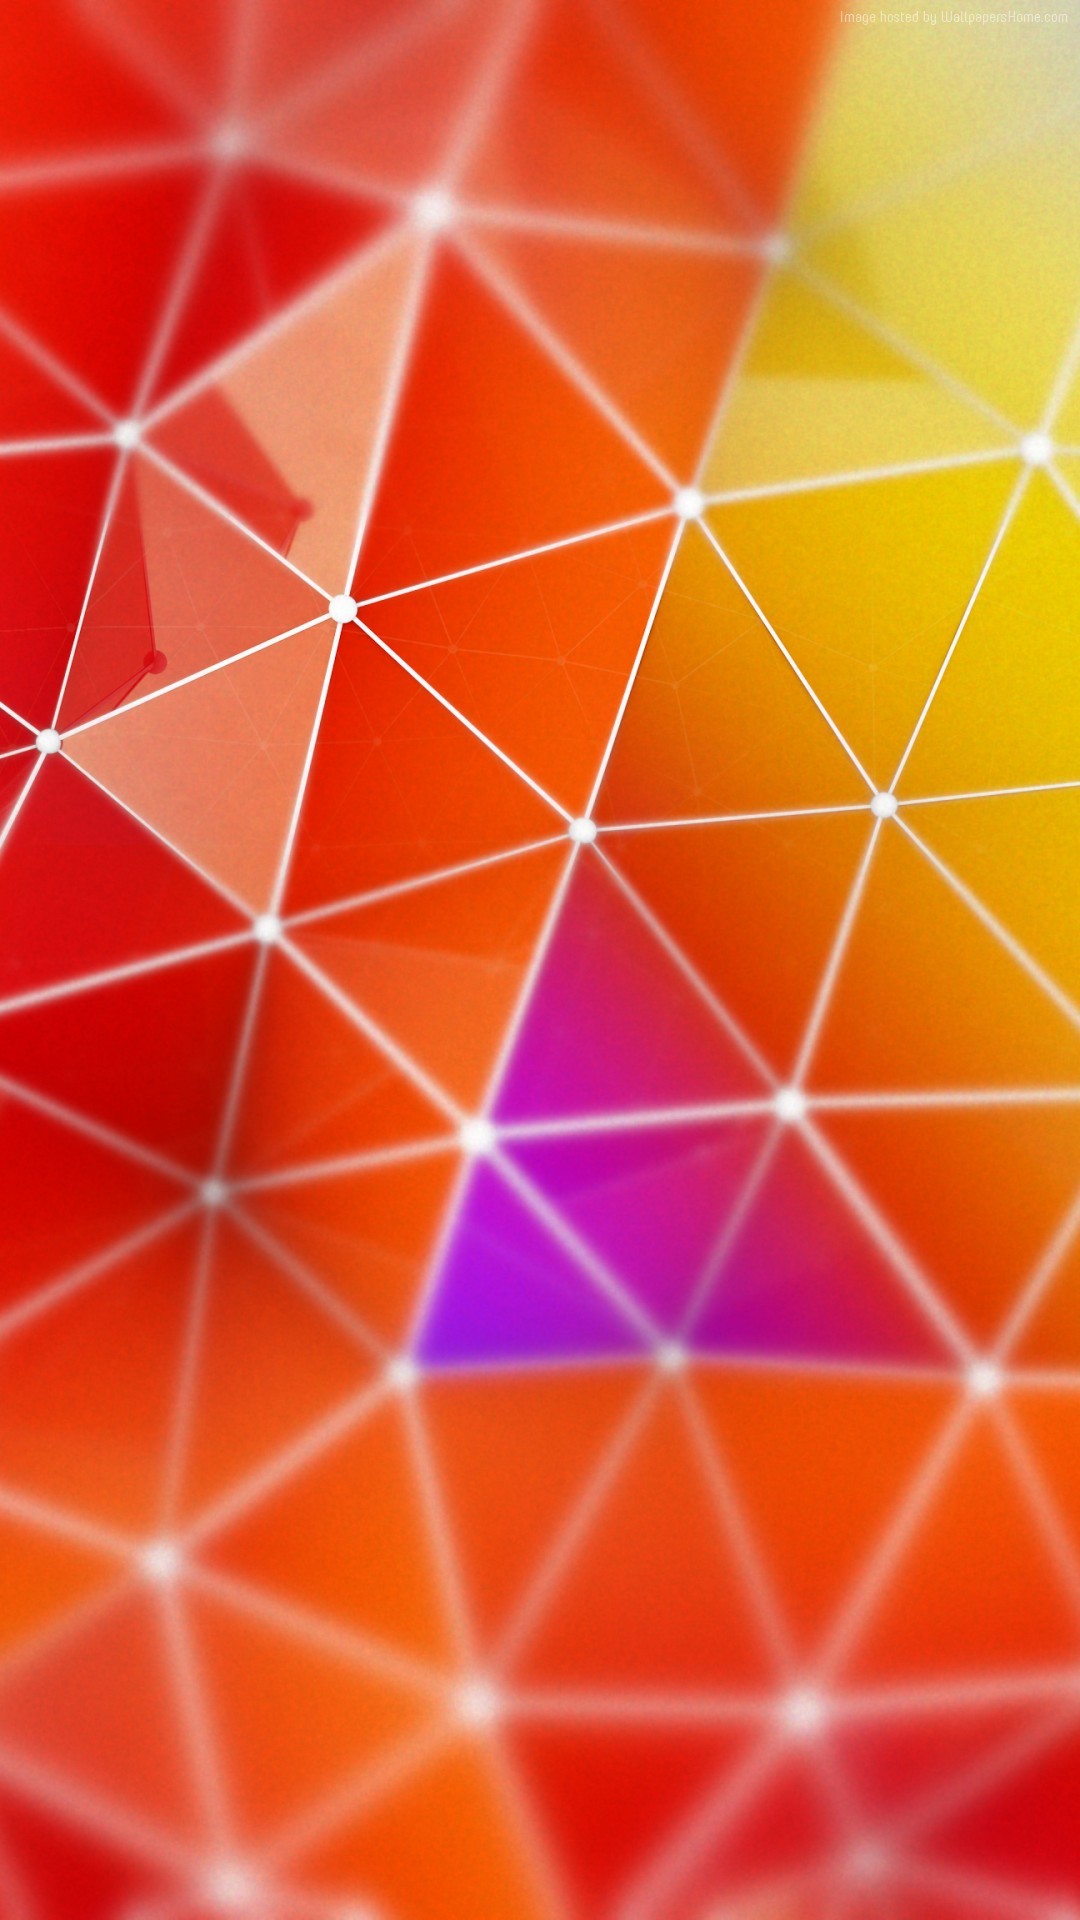 1080x1920 ... poligon wallpaper iPhone 7 polygon 4k 5k wallpaper orange red blue  background ...